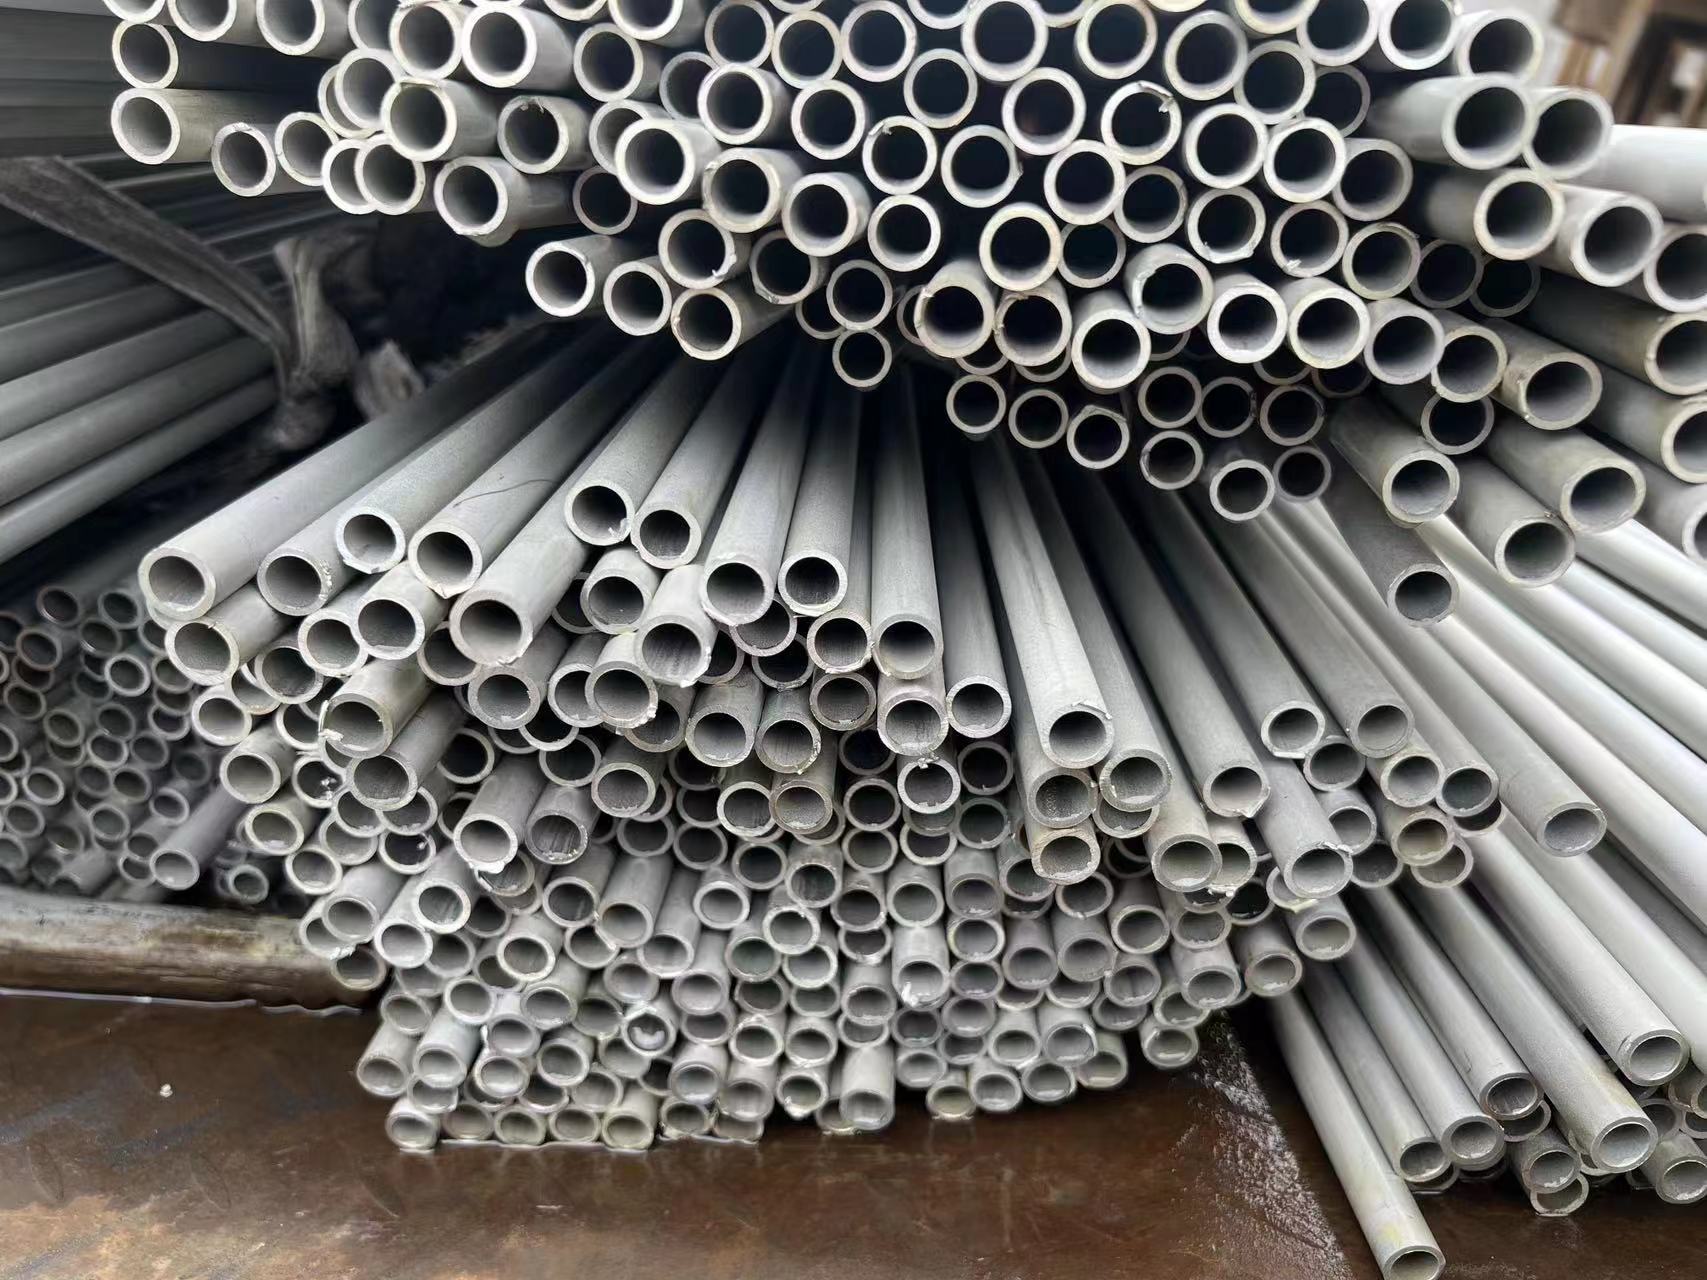 304 stainless steel tube